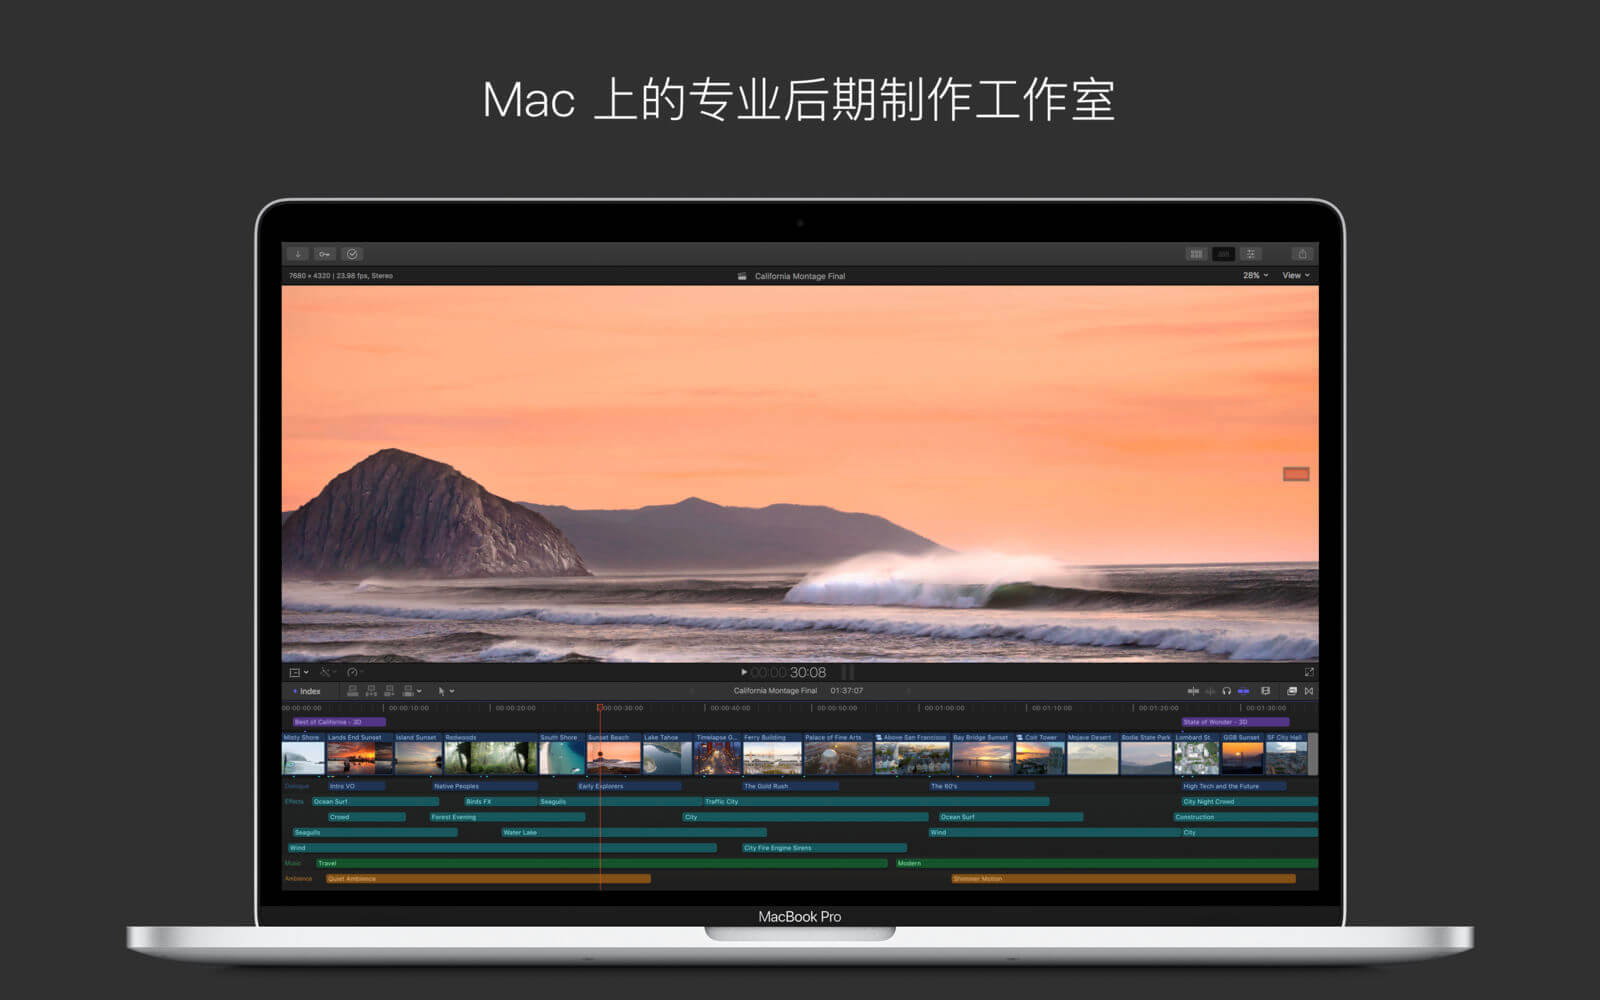 Final Cut Pro X 10.4.5 苹果视频剪辑软件中文破解版 | MAC影视后期资源站